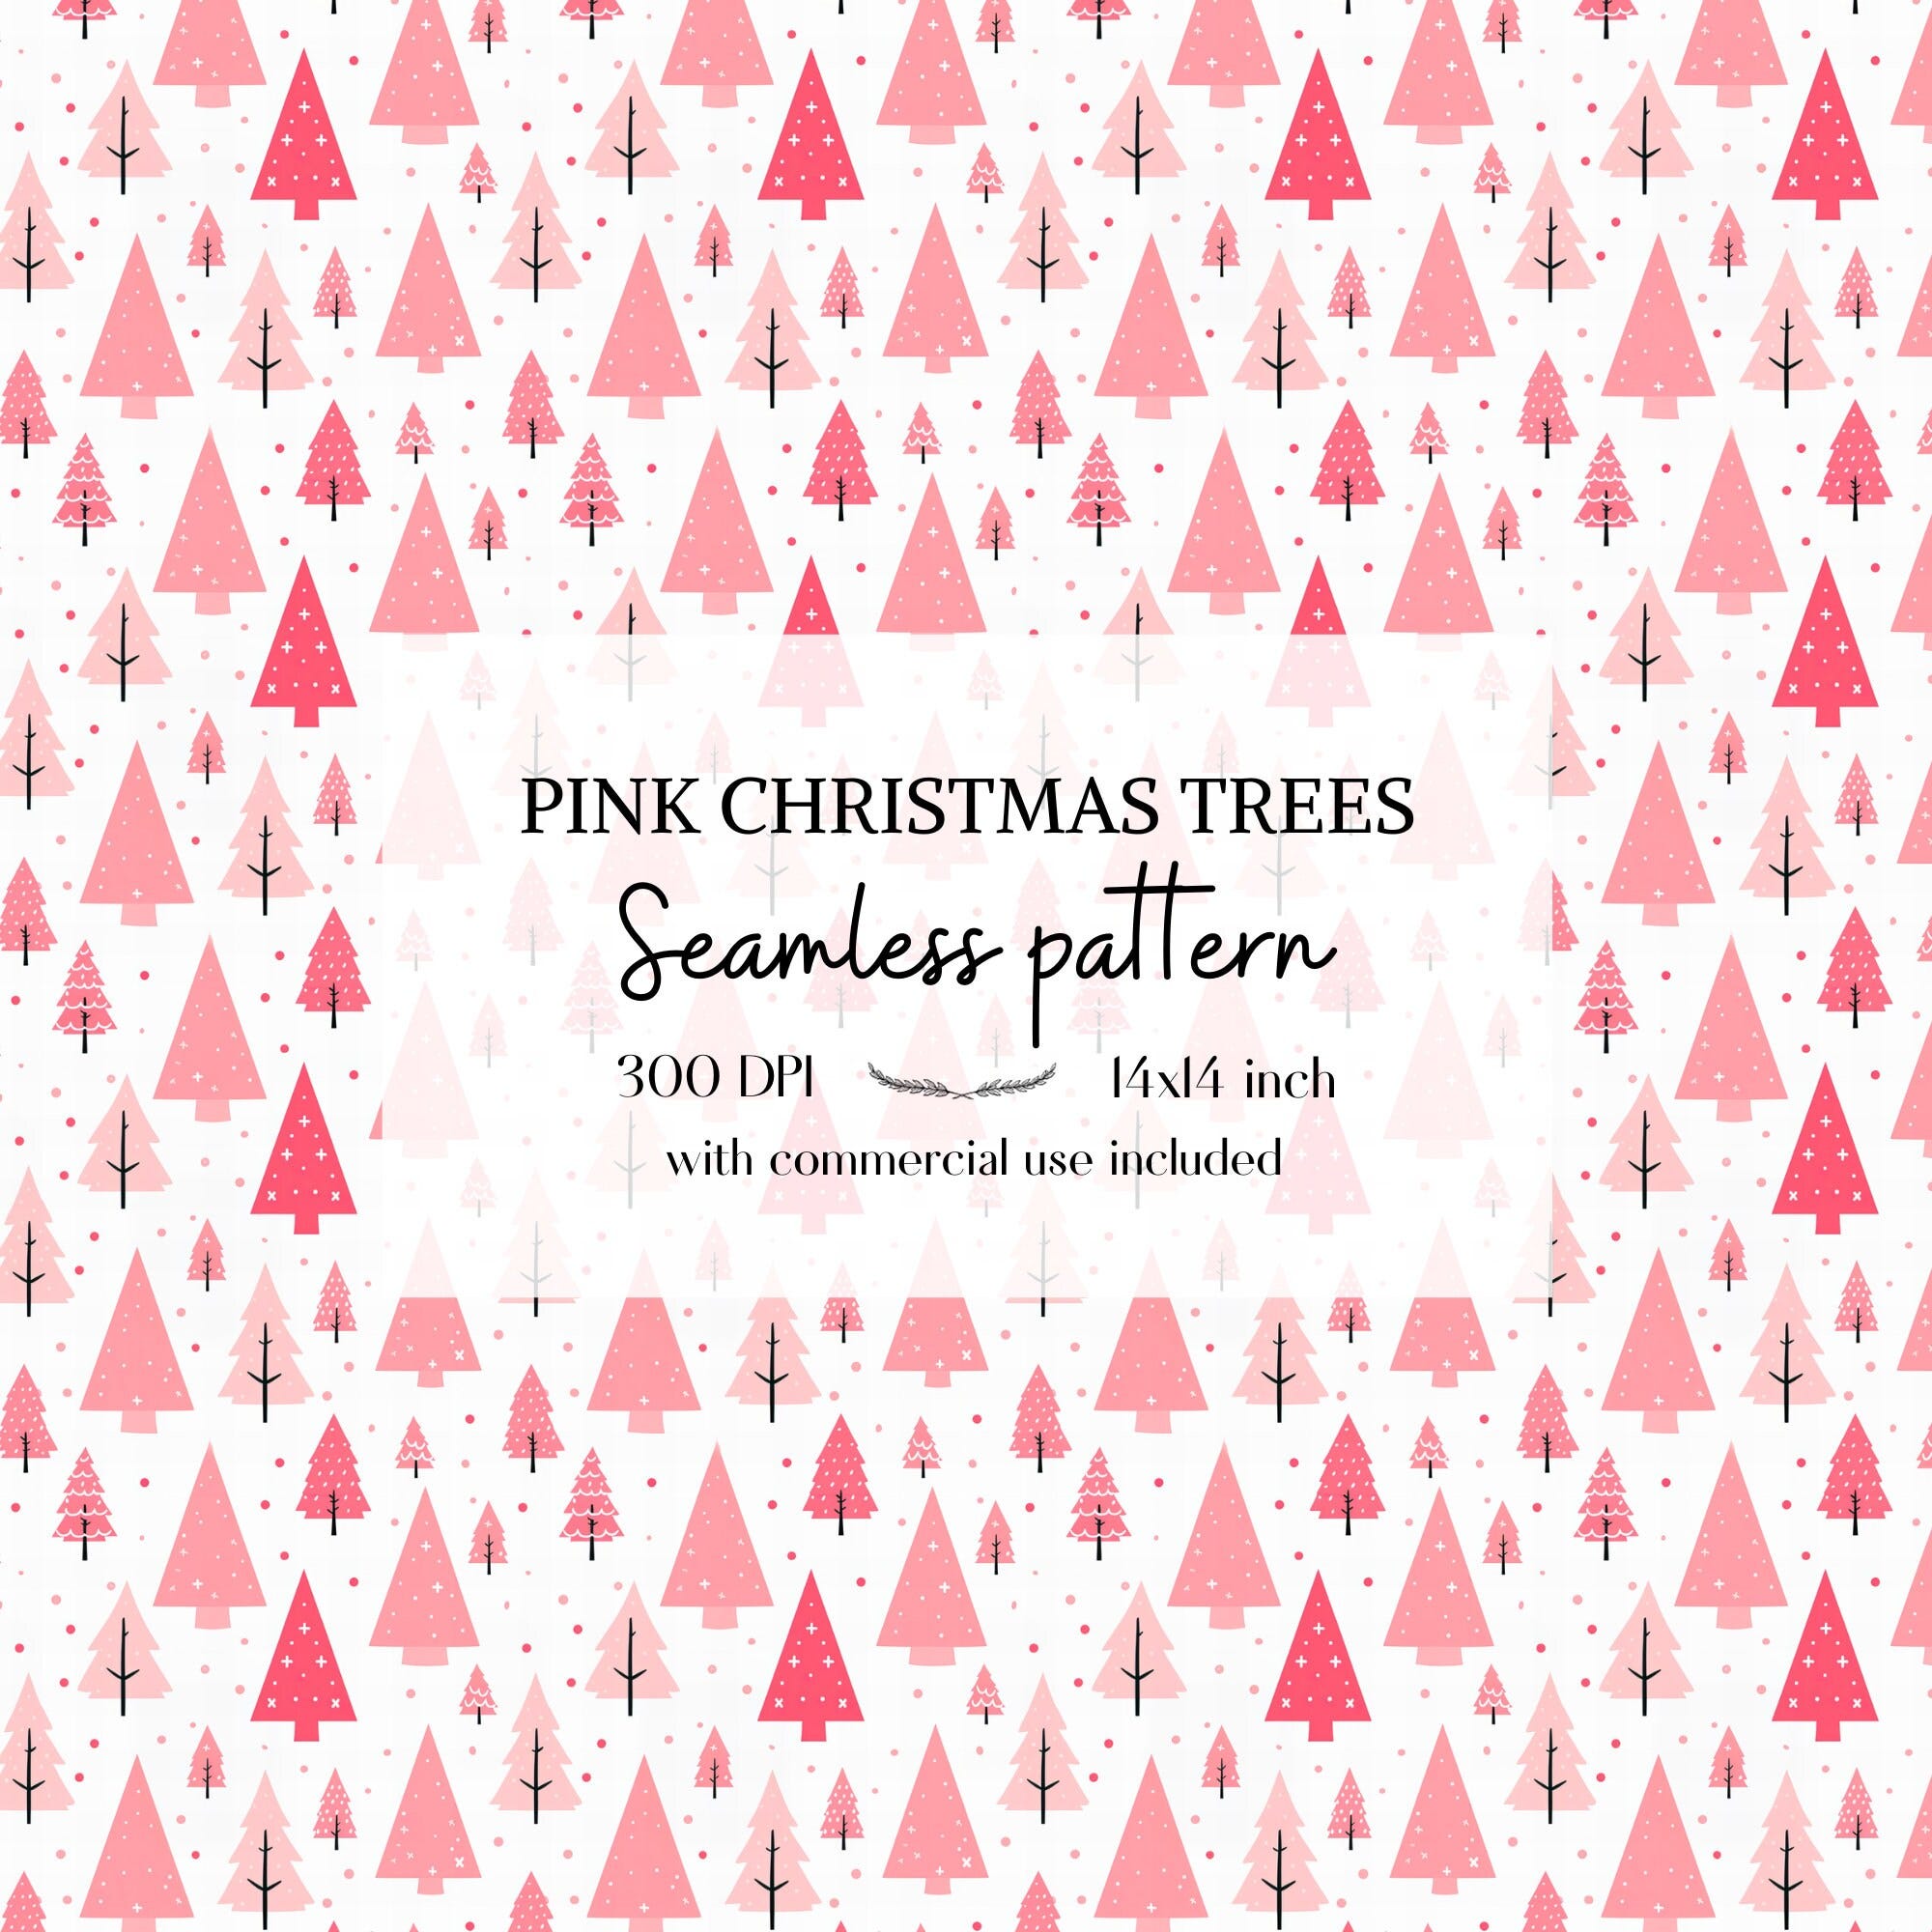 Pink Christmas trees seamless pattern, Christmas seamless pattern, Winter seamless pattern, With commercial use